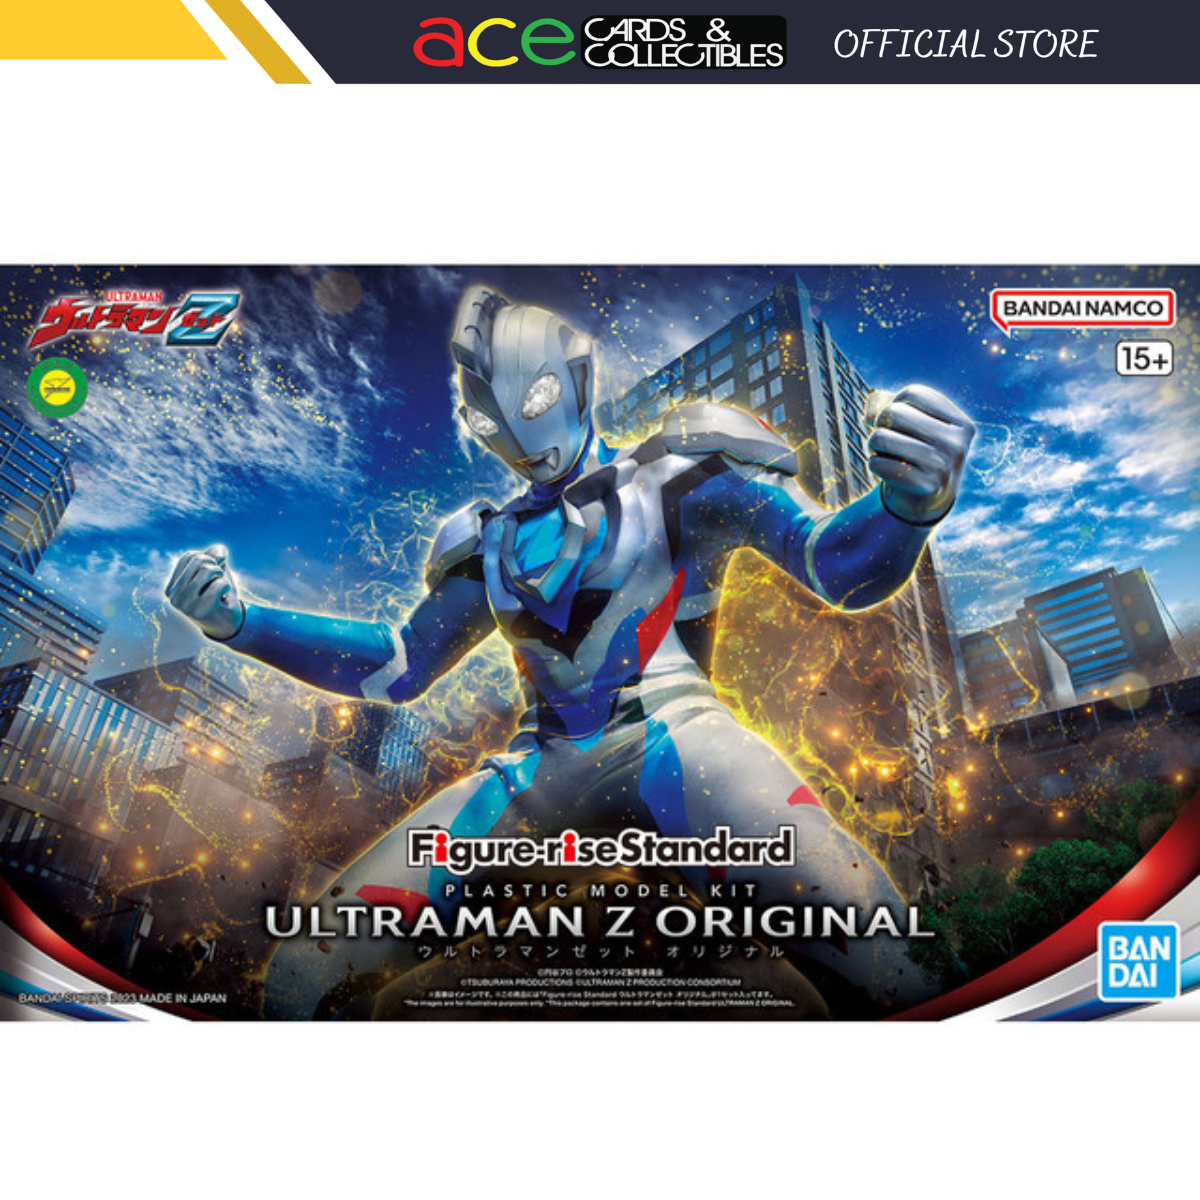 Ultraman Figure-rise Standard Ultraman Z Original-Bandai-Ace Cards & Collectibles